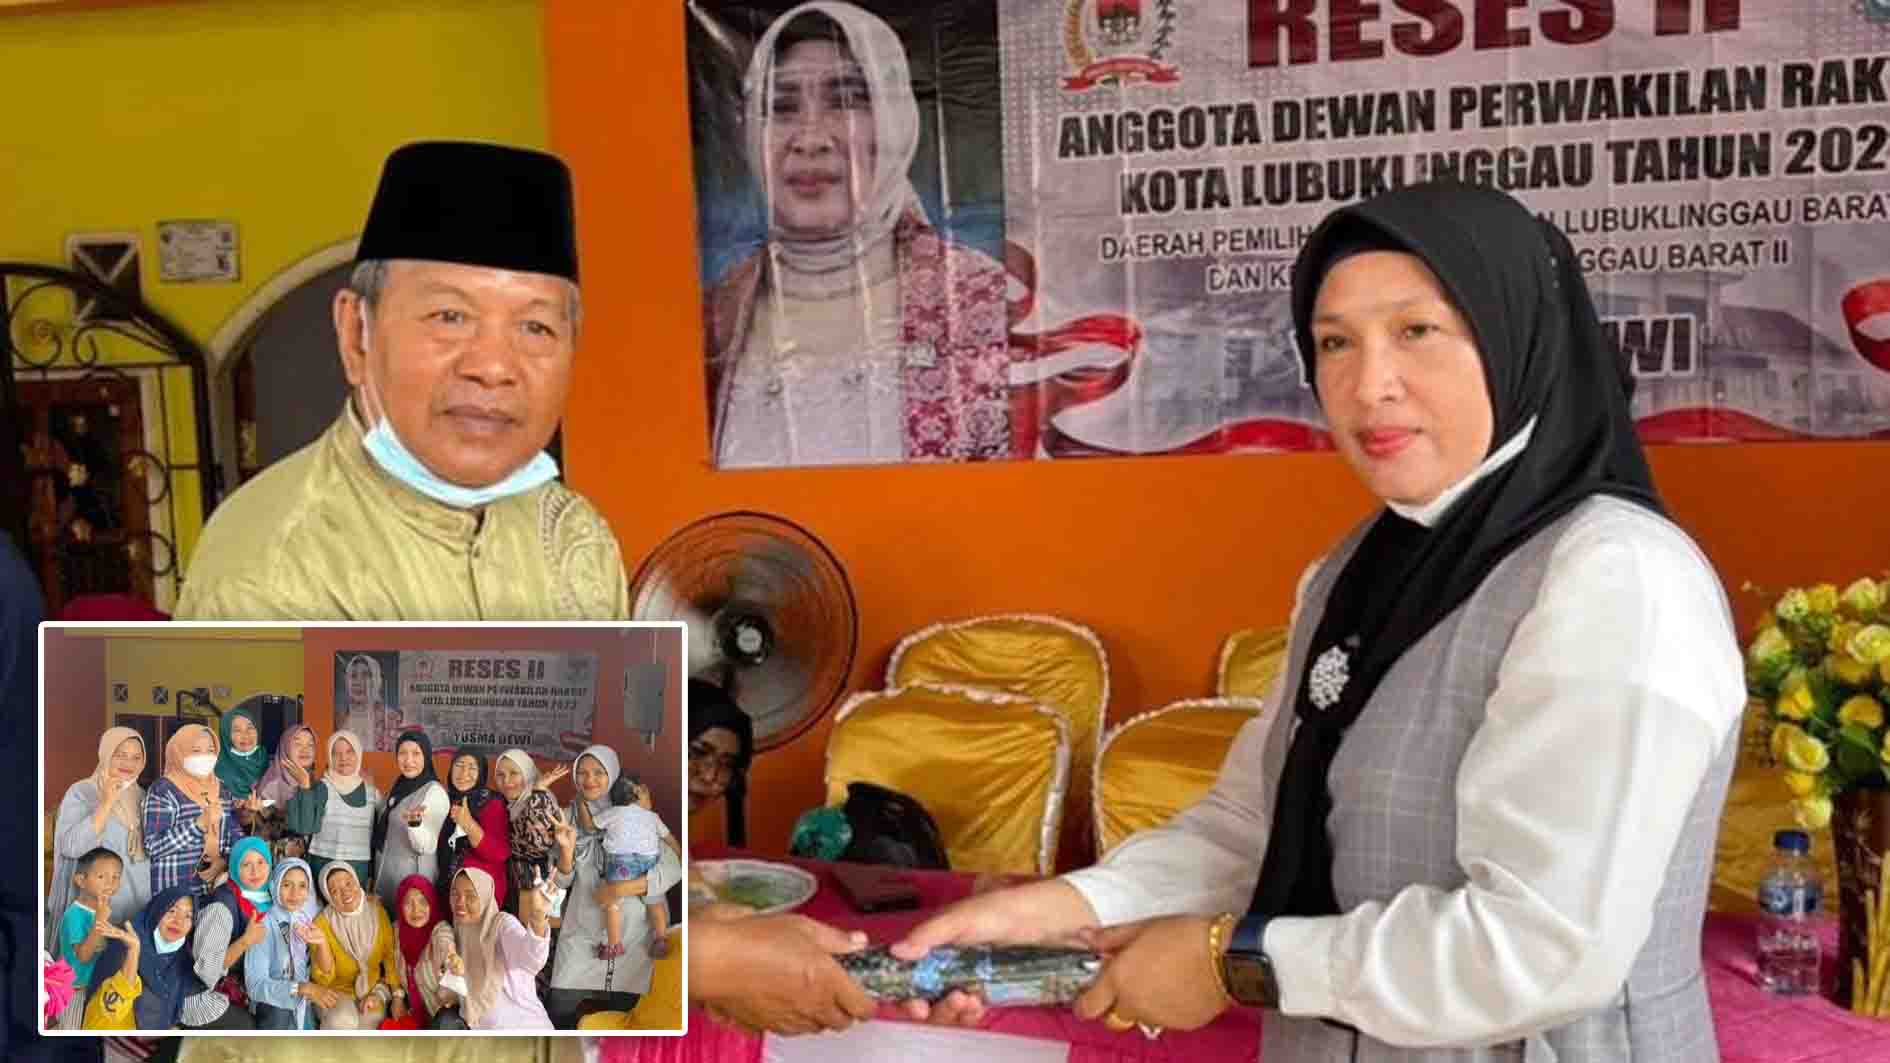 Anggota DPRD Lubuklinggau Yusma Dewi akan Berjuang untuk Kesejahteraan Masyarakat